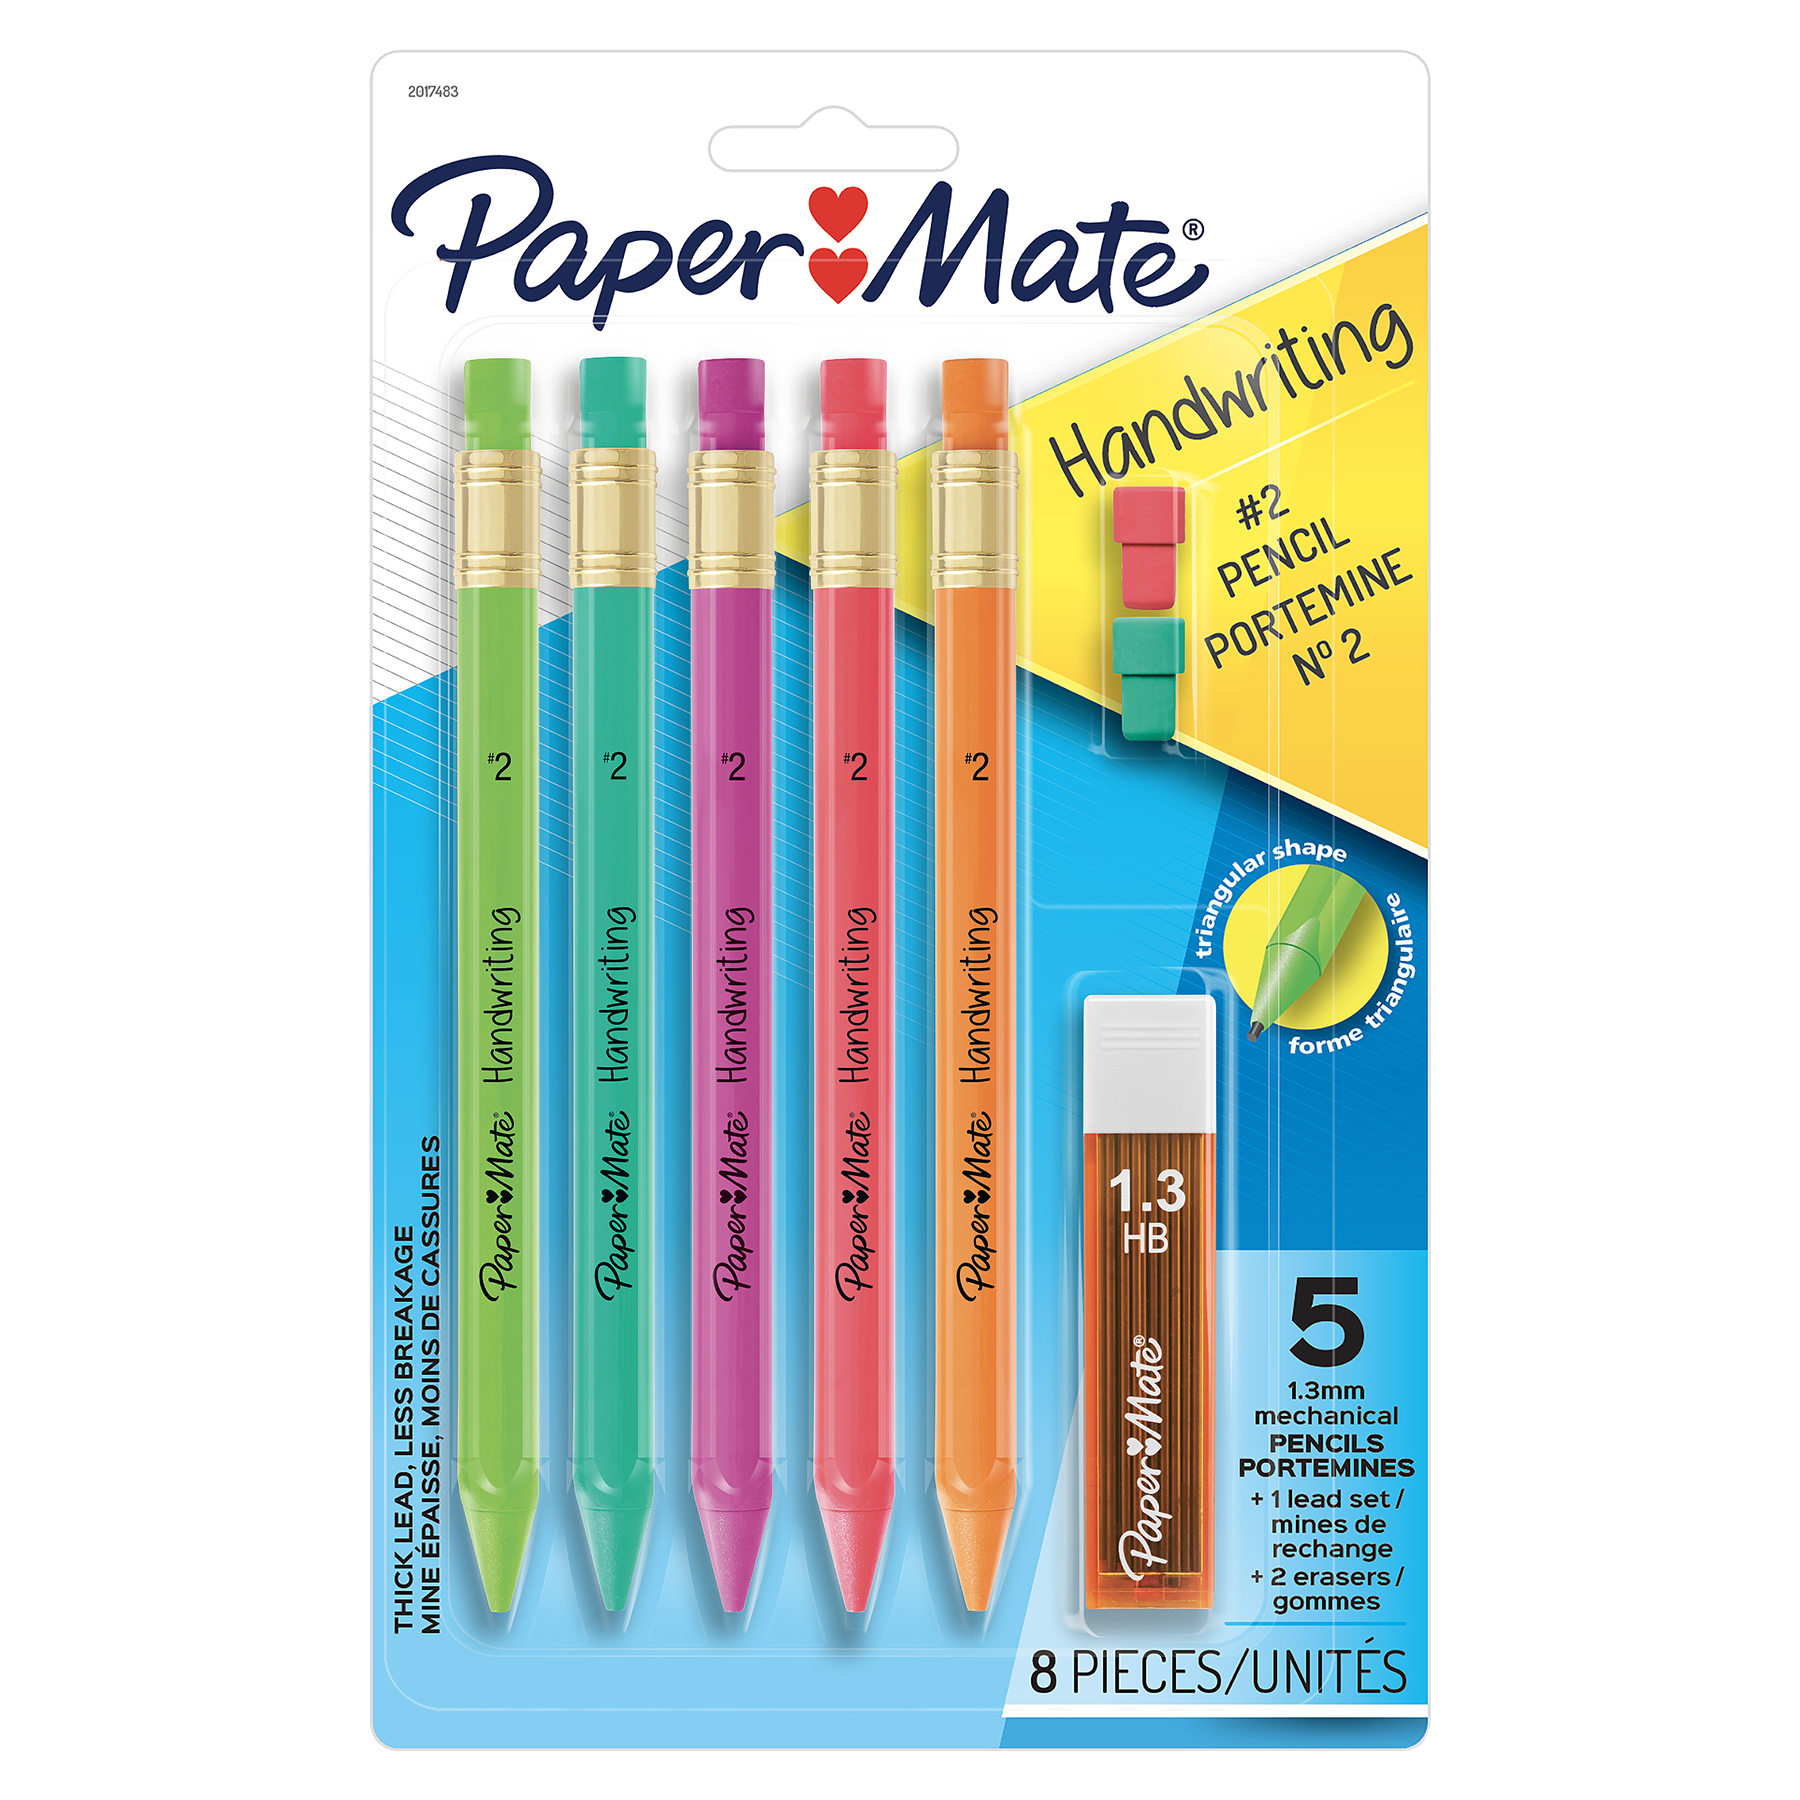 J.R. Moon Pencil Co. Cap Erasers, 1 x 1/2, Assorted Colors, 144 Erasers  Per Pack, Set Of 5 Packs